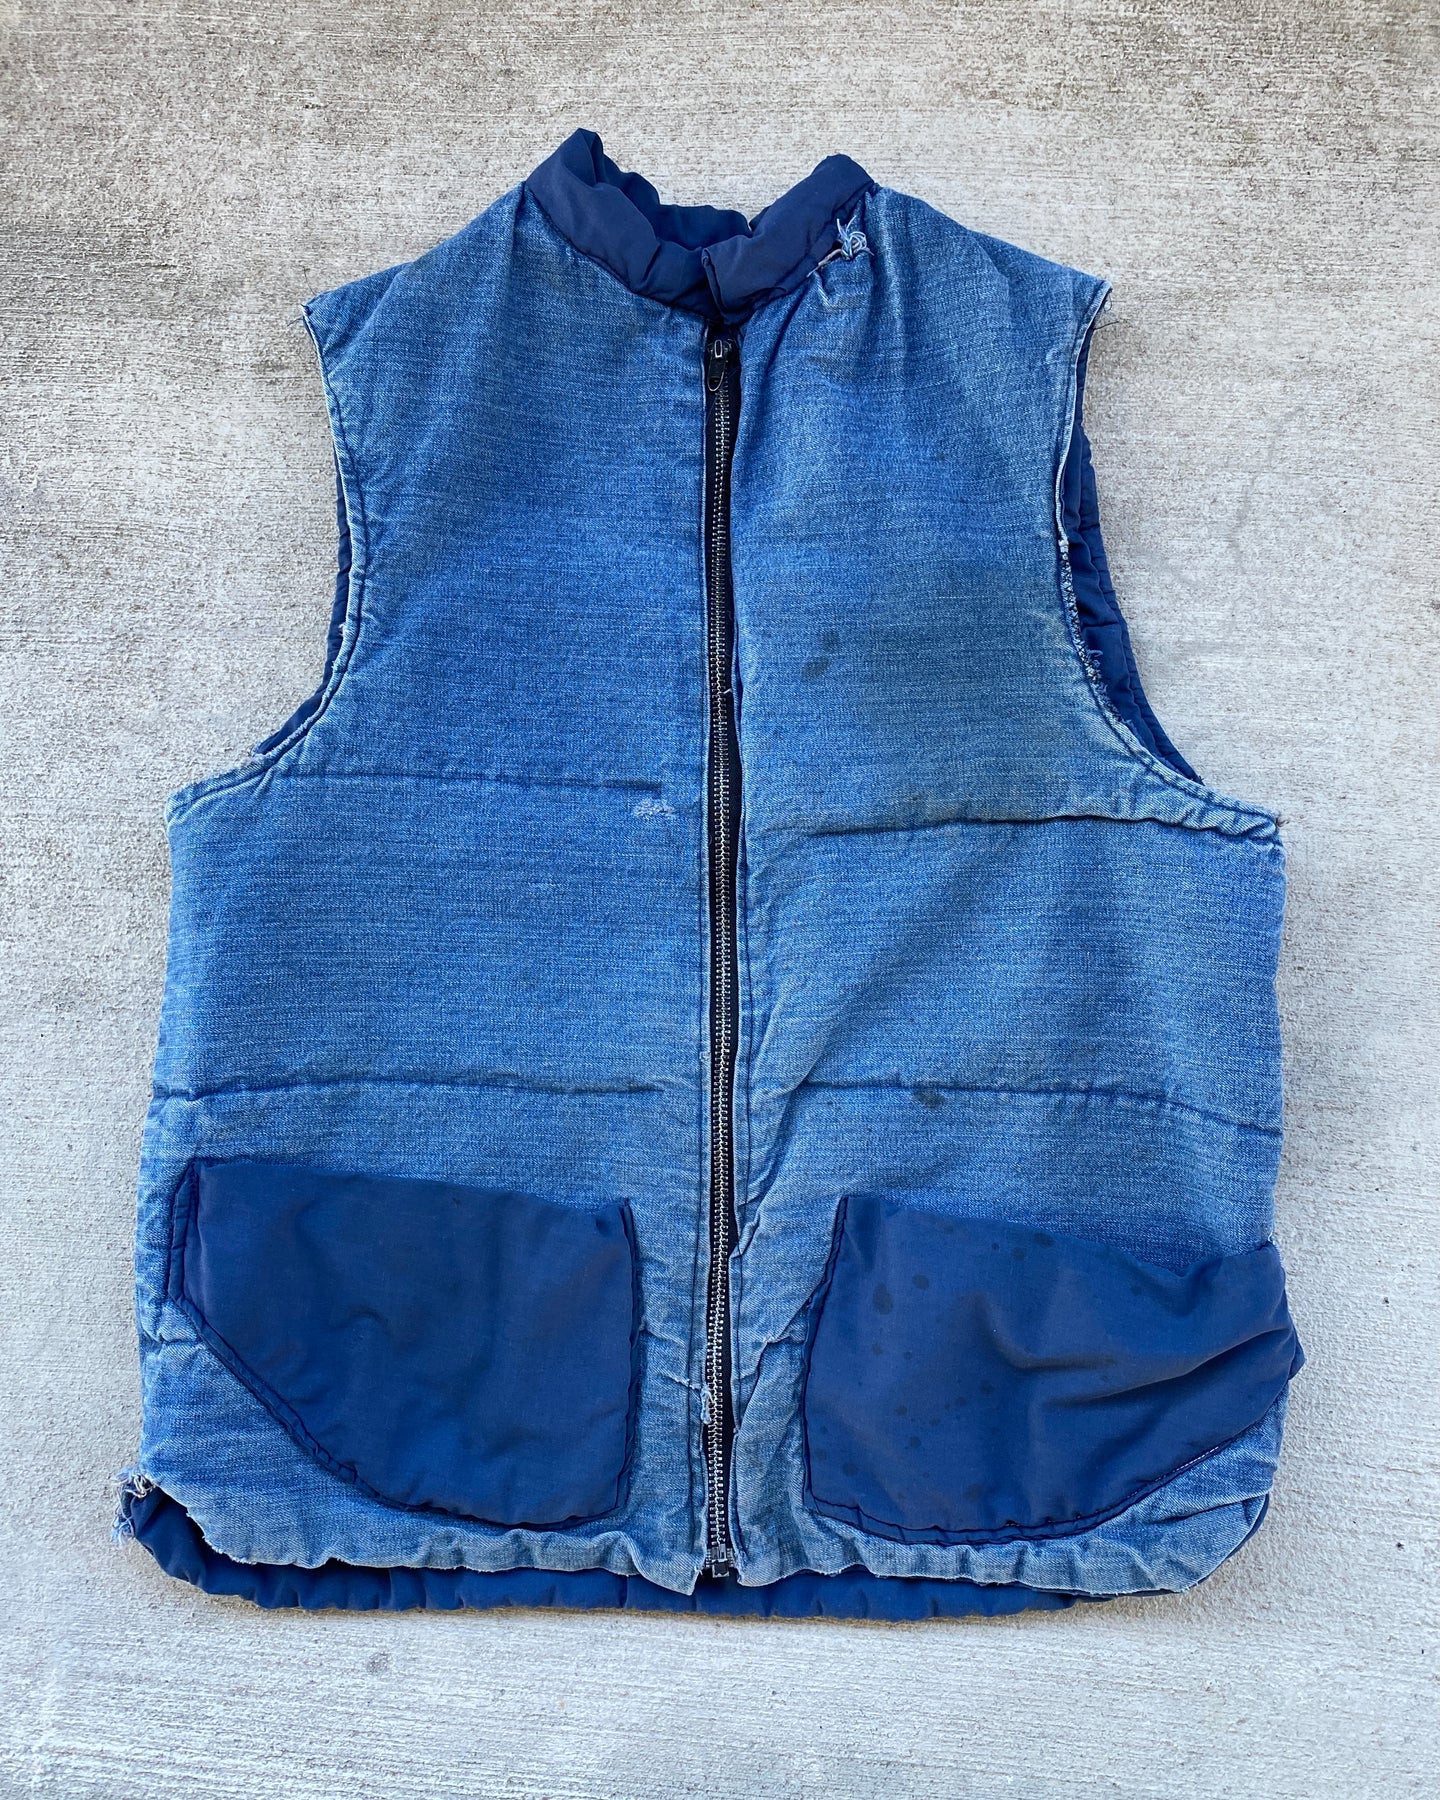 1990s Reversible Denim Puffer Vest - Size Medium